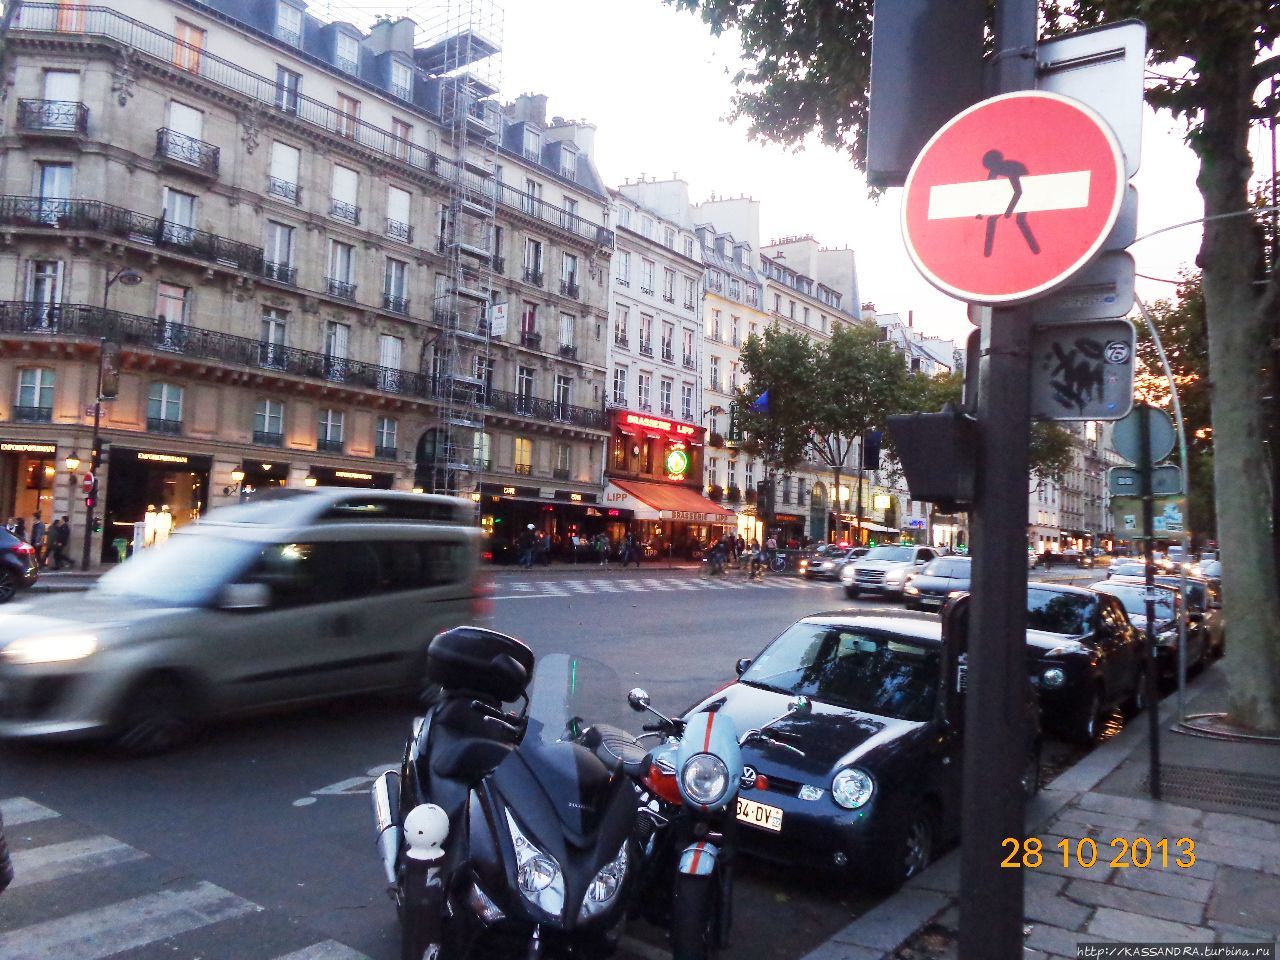 Brasserie Lipp Париж, Франция